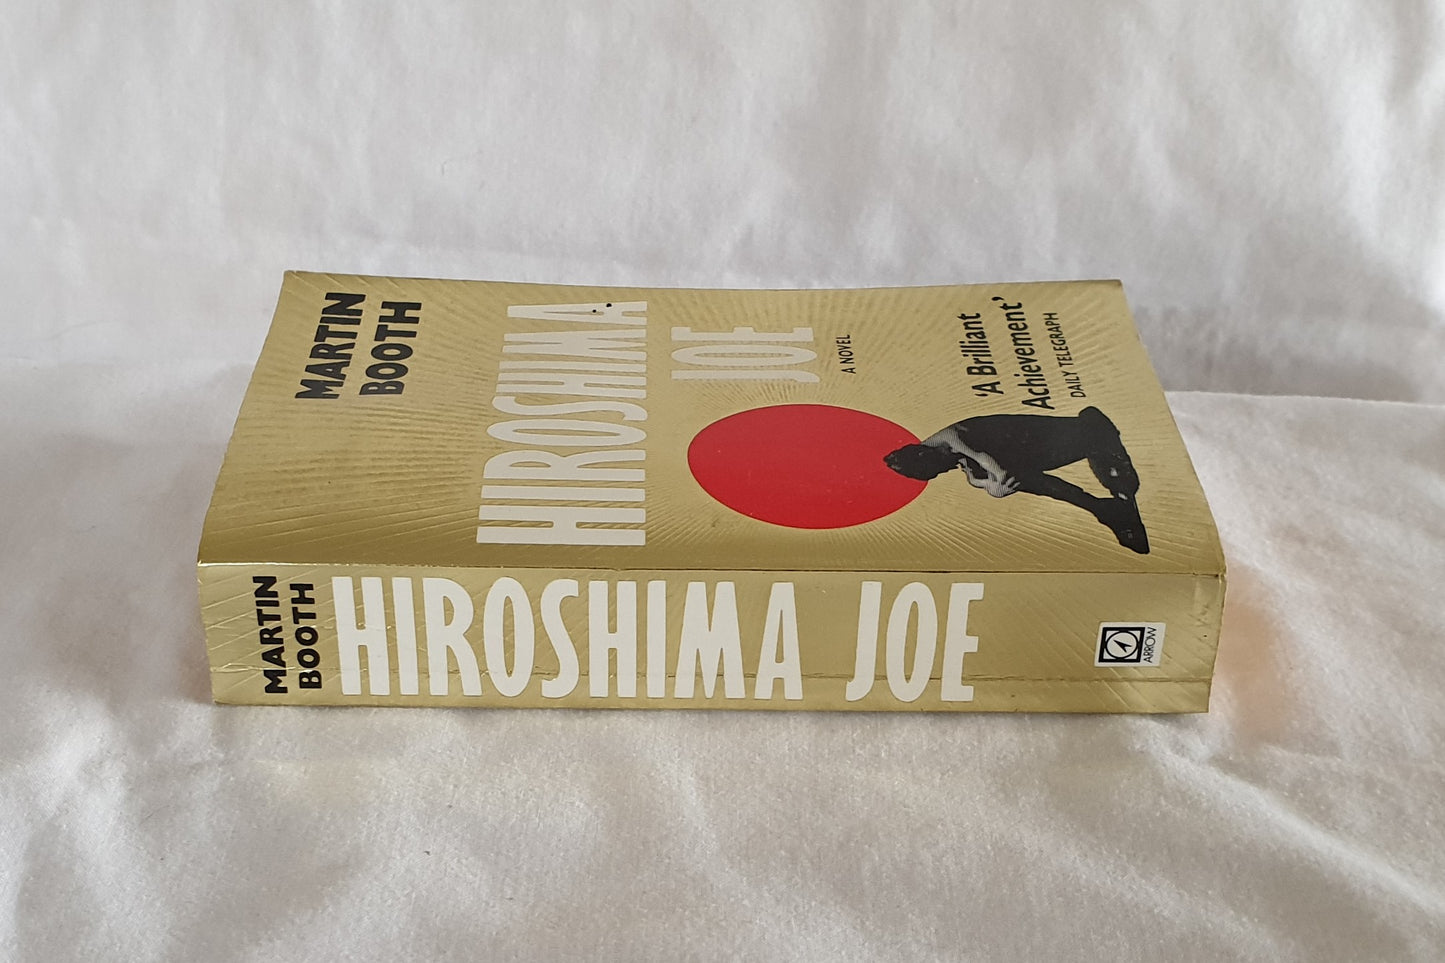 Hiroshima Joe by Martin Booth